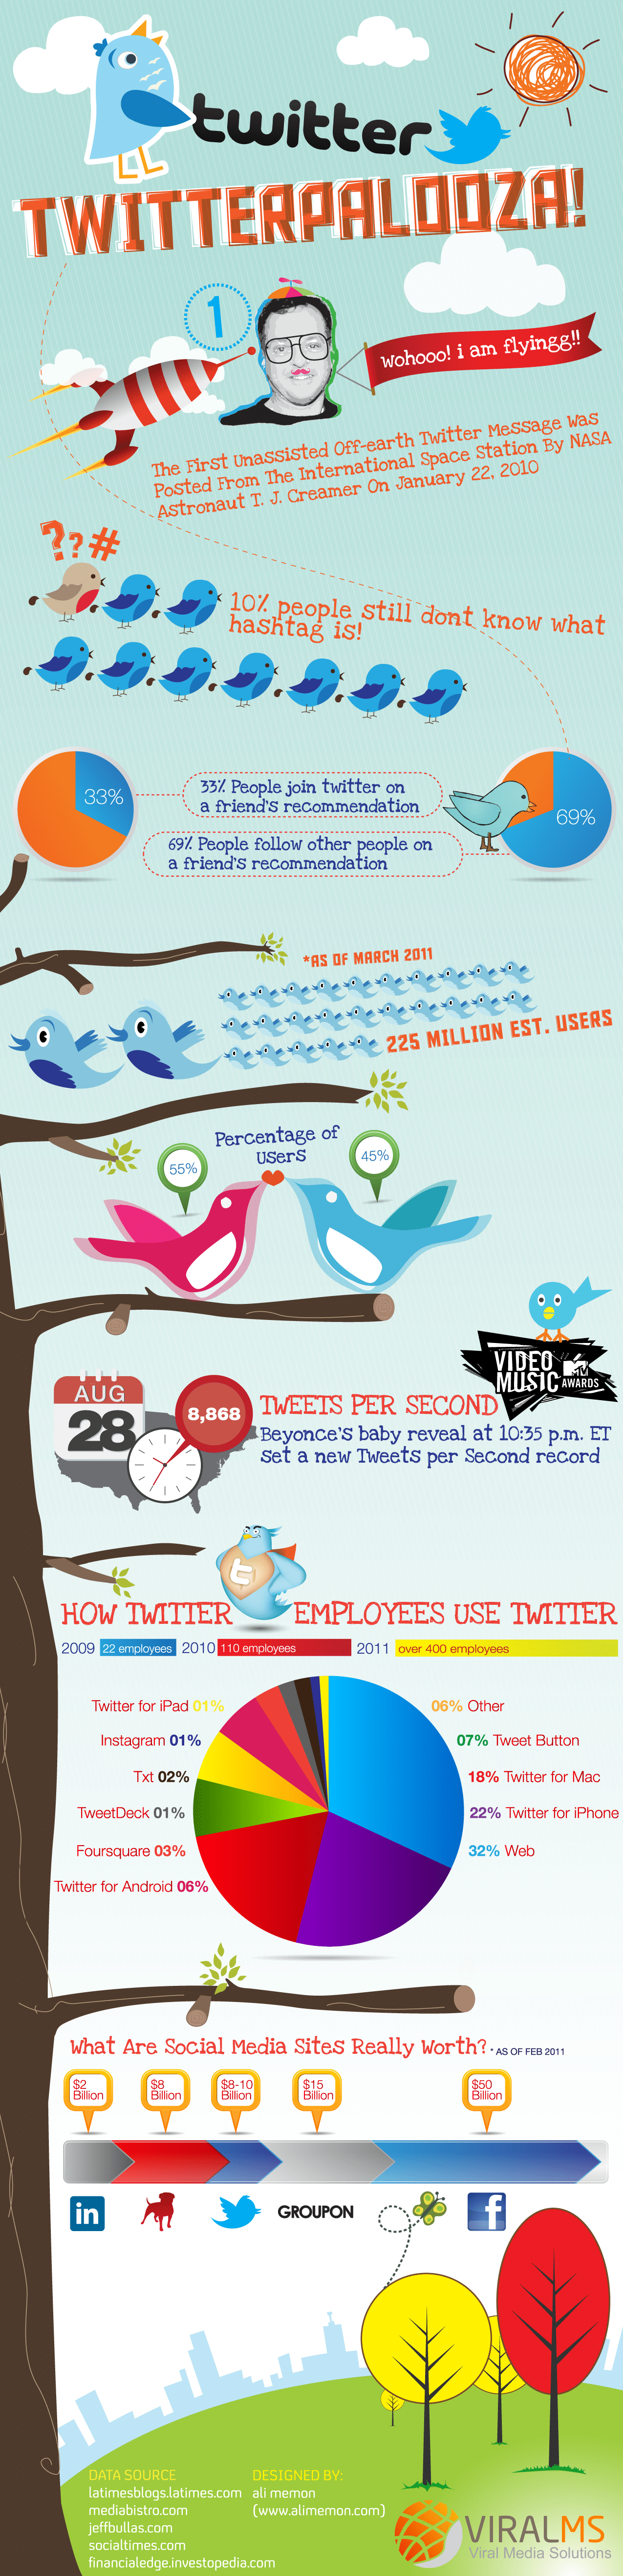 Twitterpalooza: Twitter Statistics In Focus [Infographic]